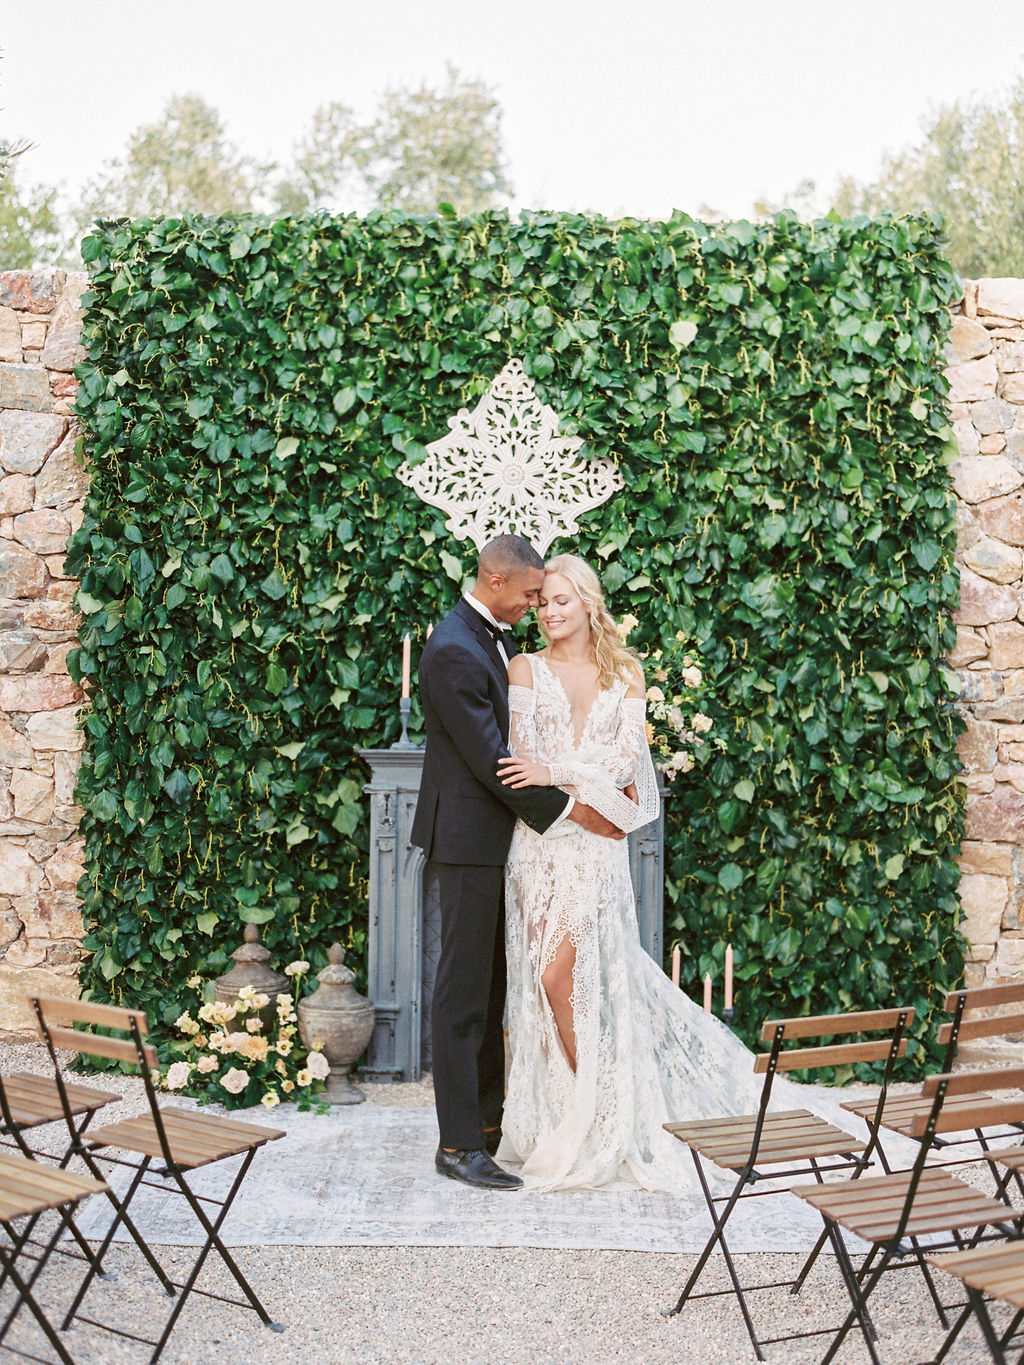 Wedding In Greece - Ceremony